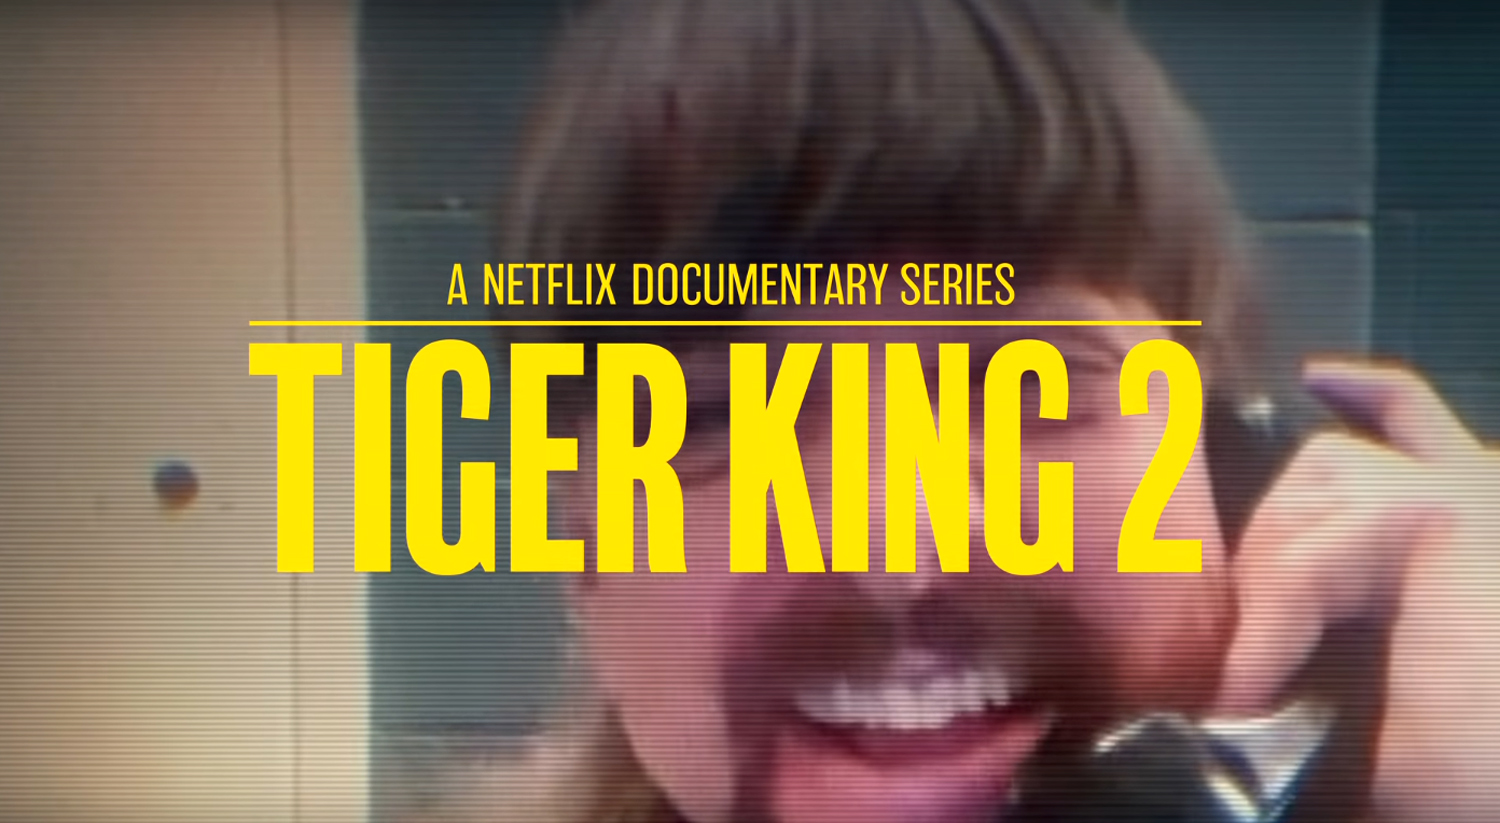 Tiger King Season 2